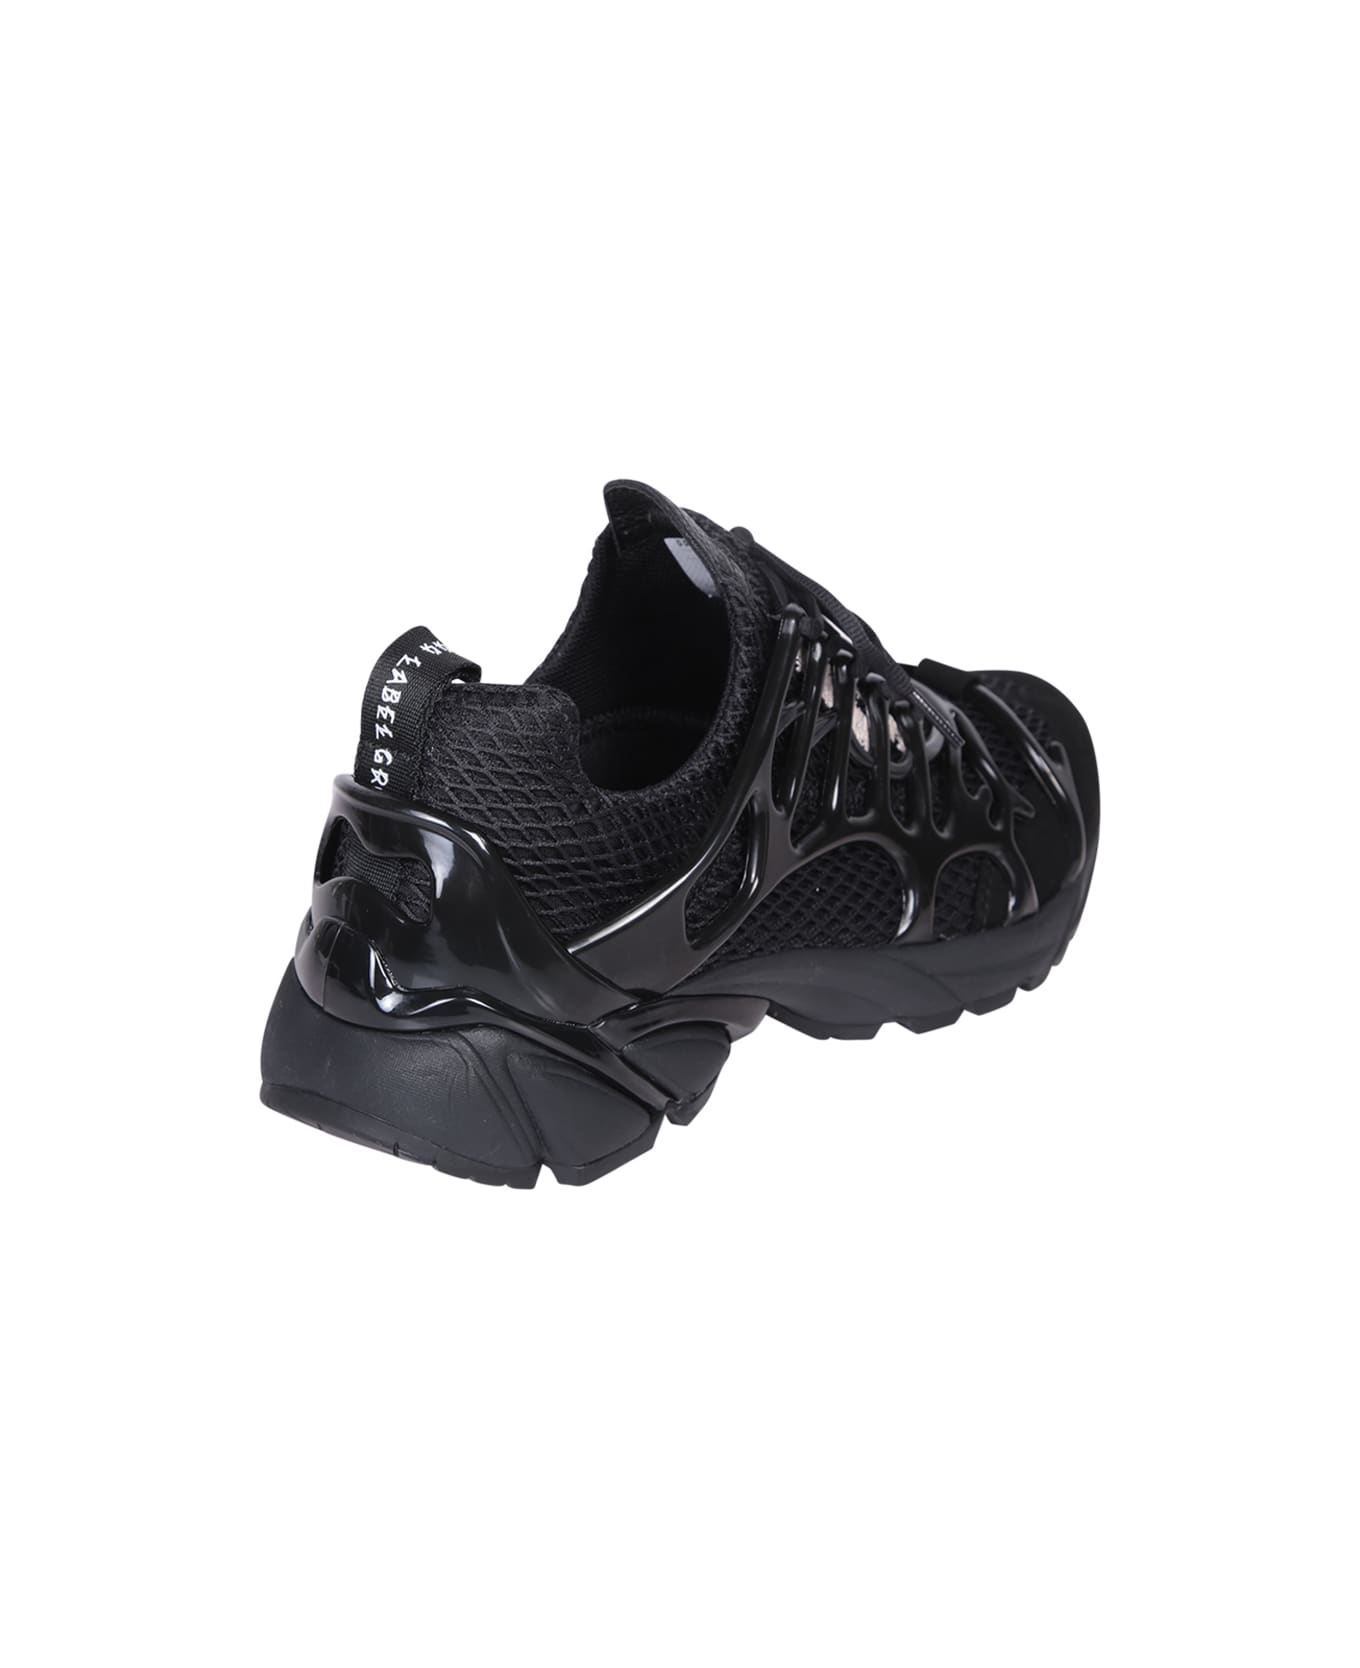 44 Label Group 44 Symbiont Black Sneakers - Black